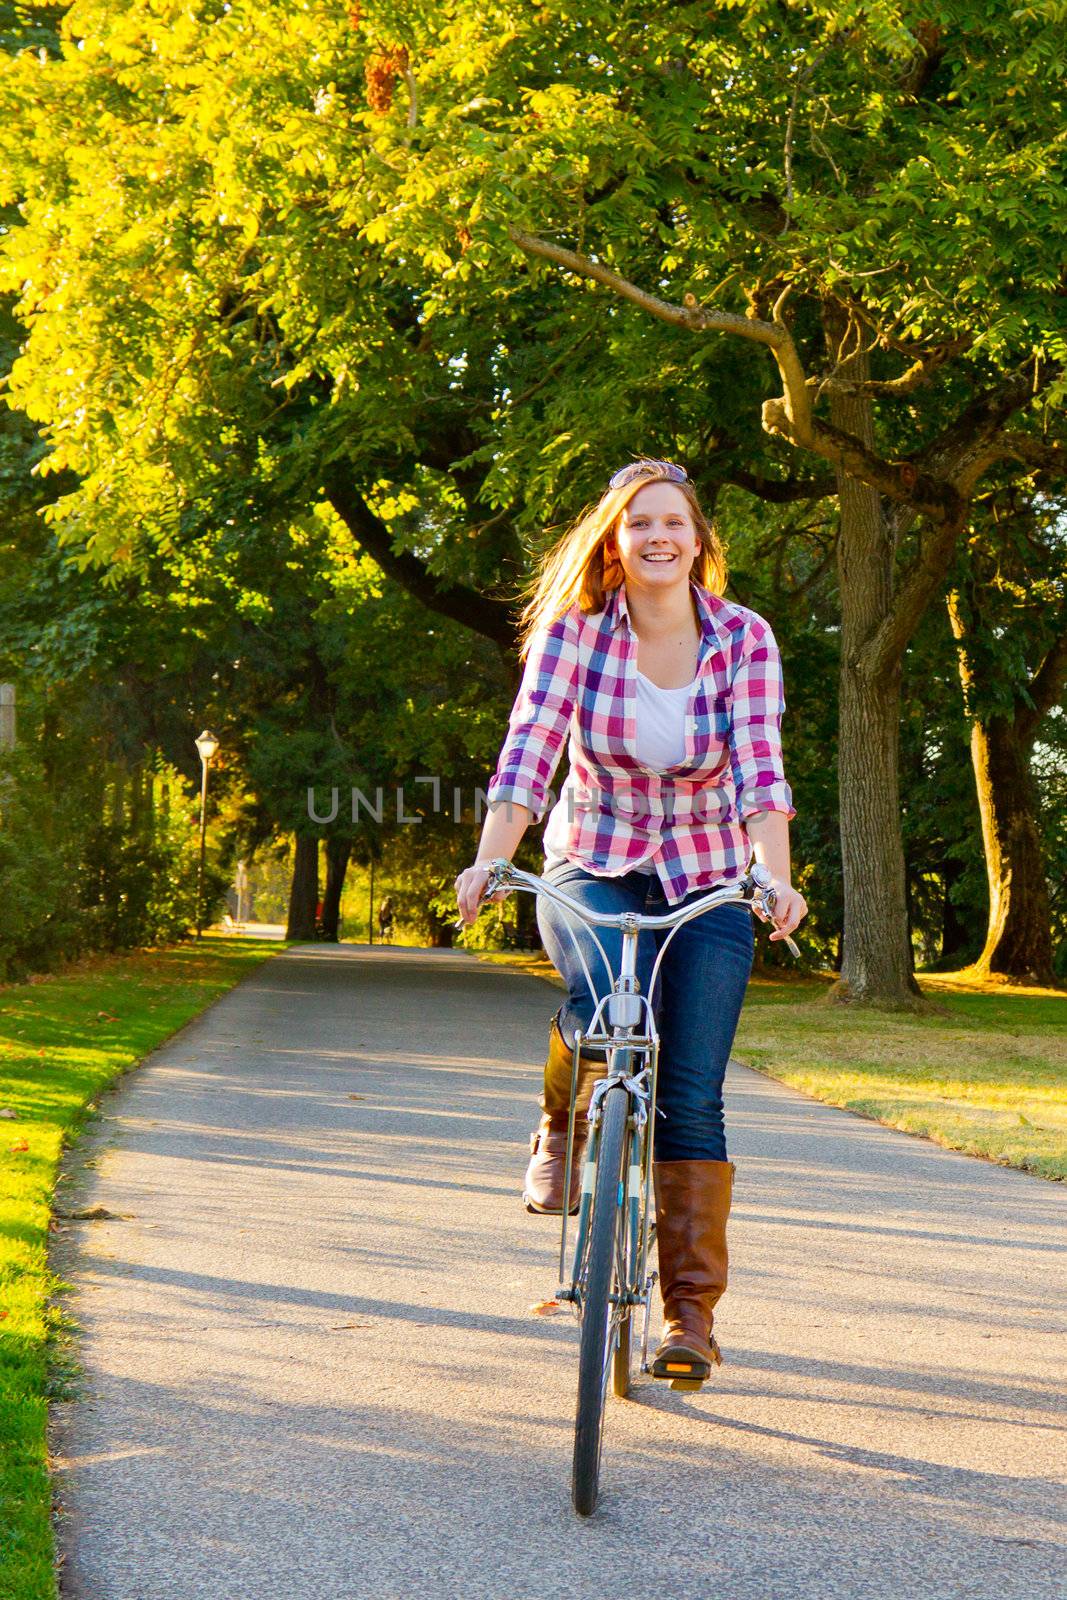 Woman Riding Bike by joshuaraineyphotography